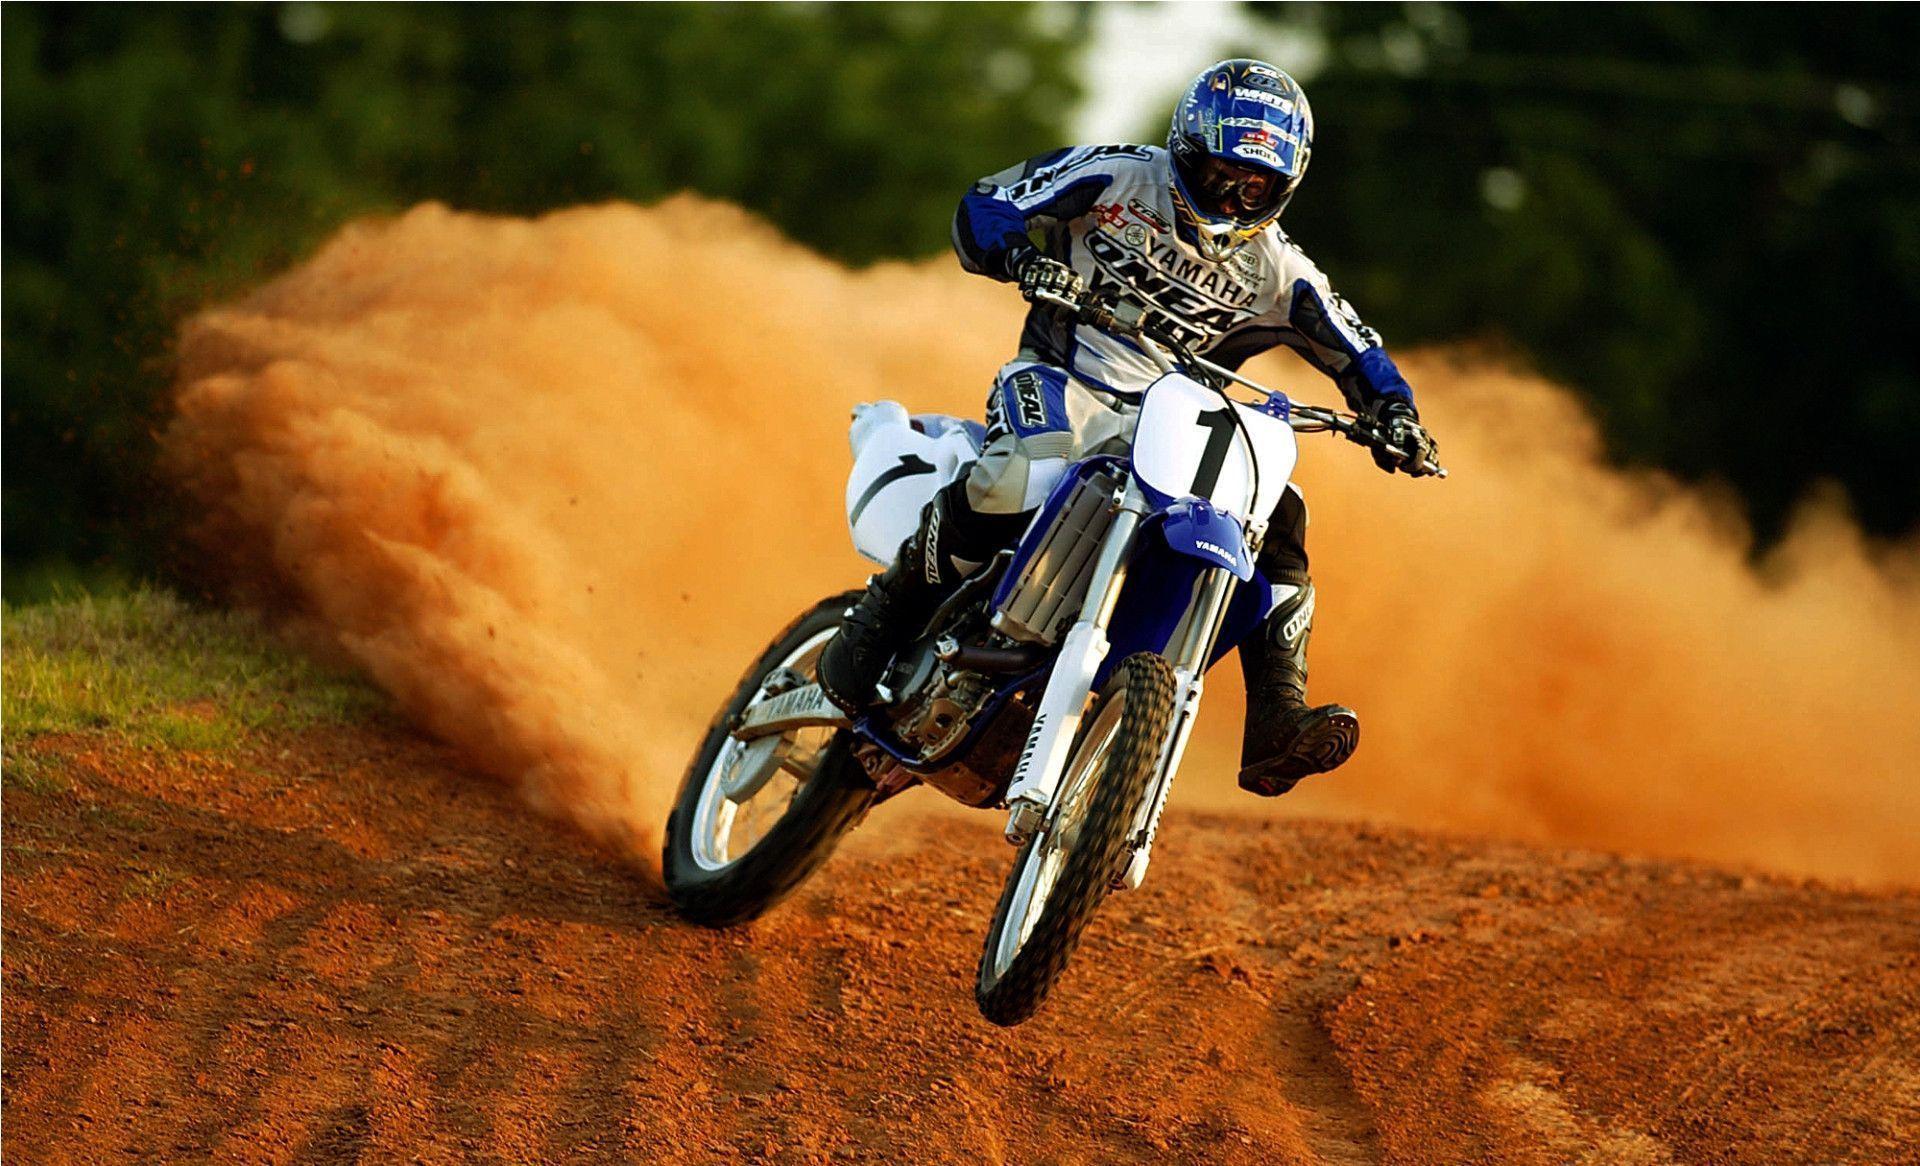 Otomotif Wallpaper: Super Motocross Wallpaper High Resolution HD